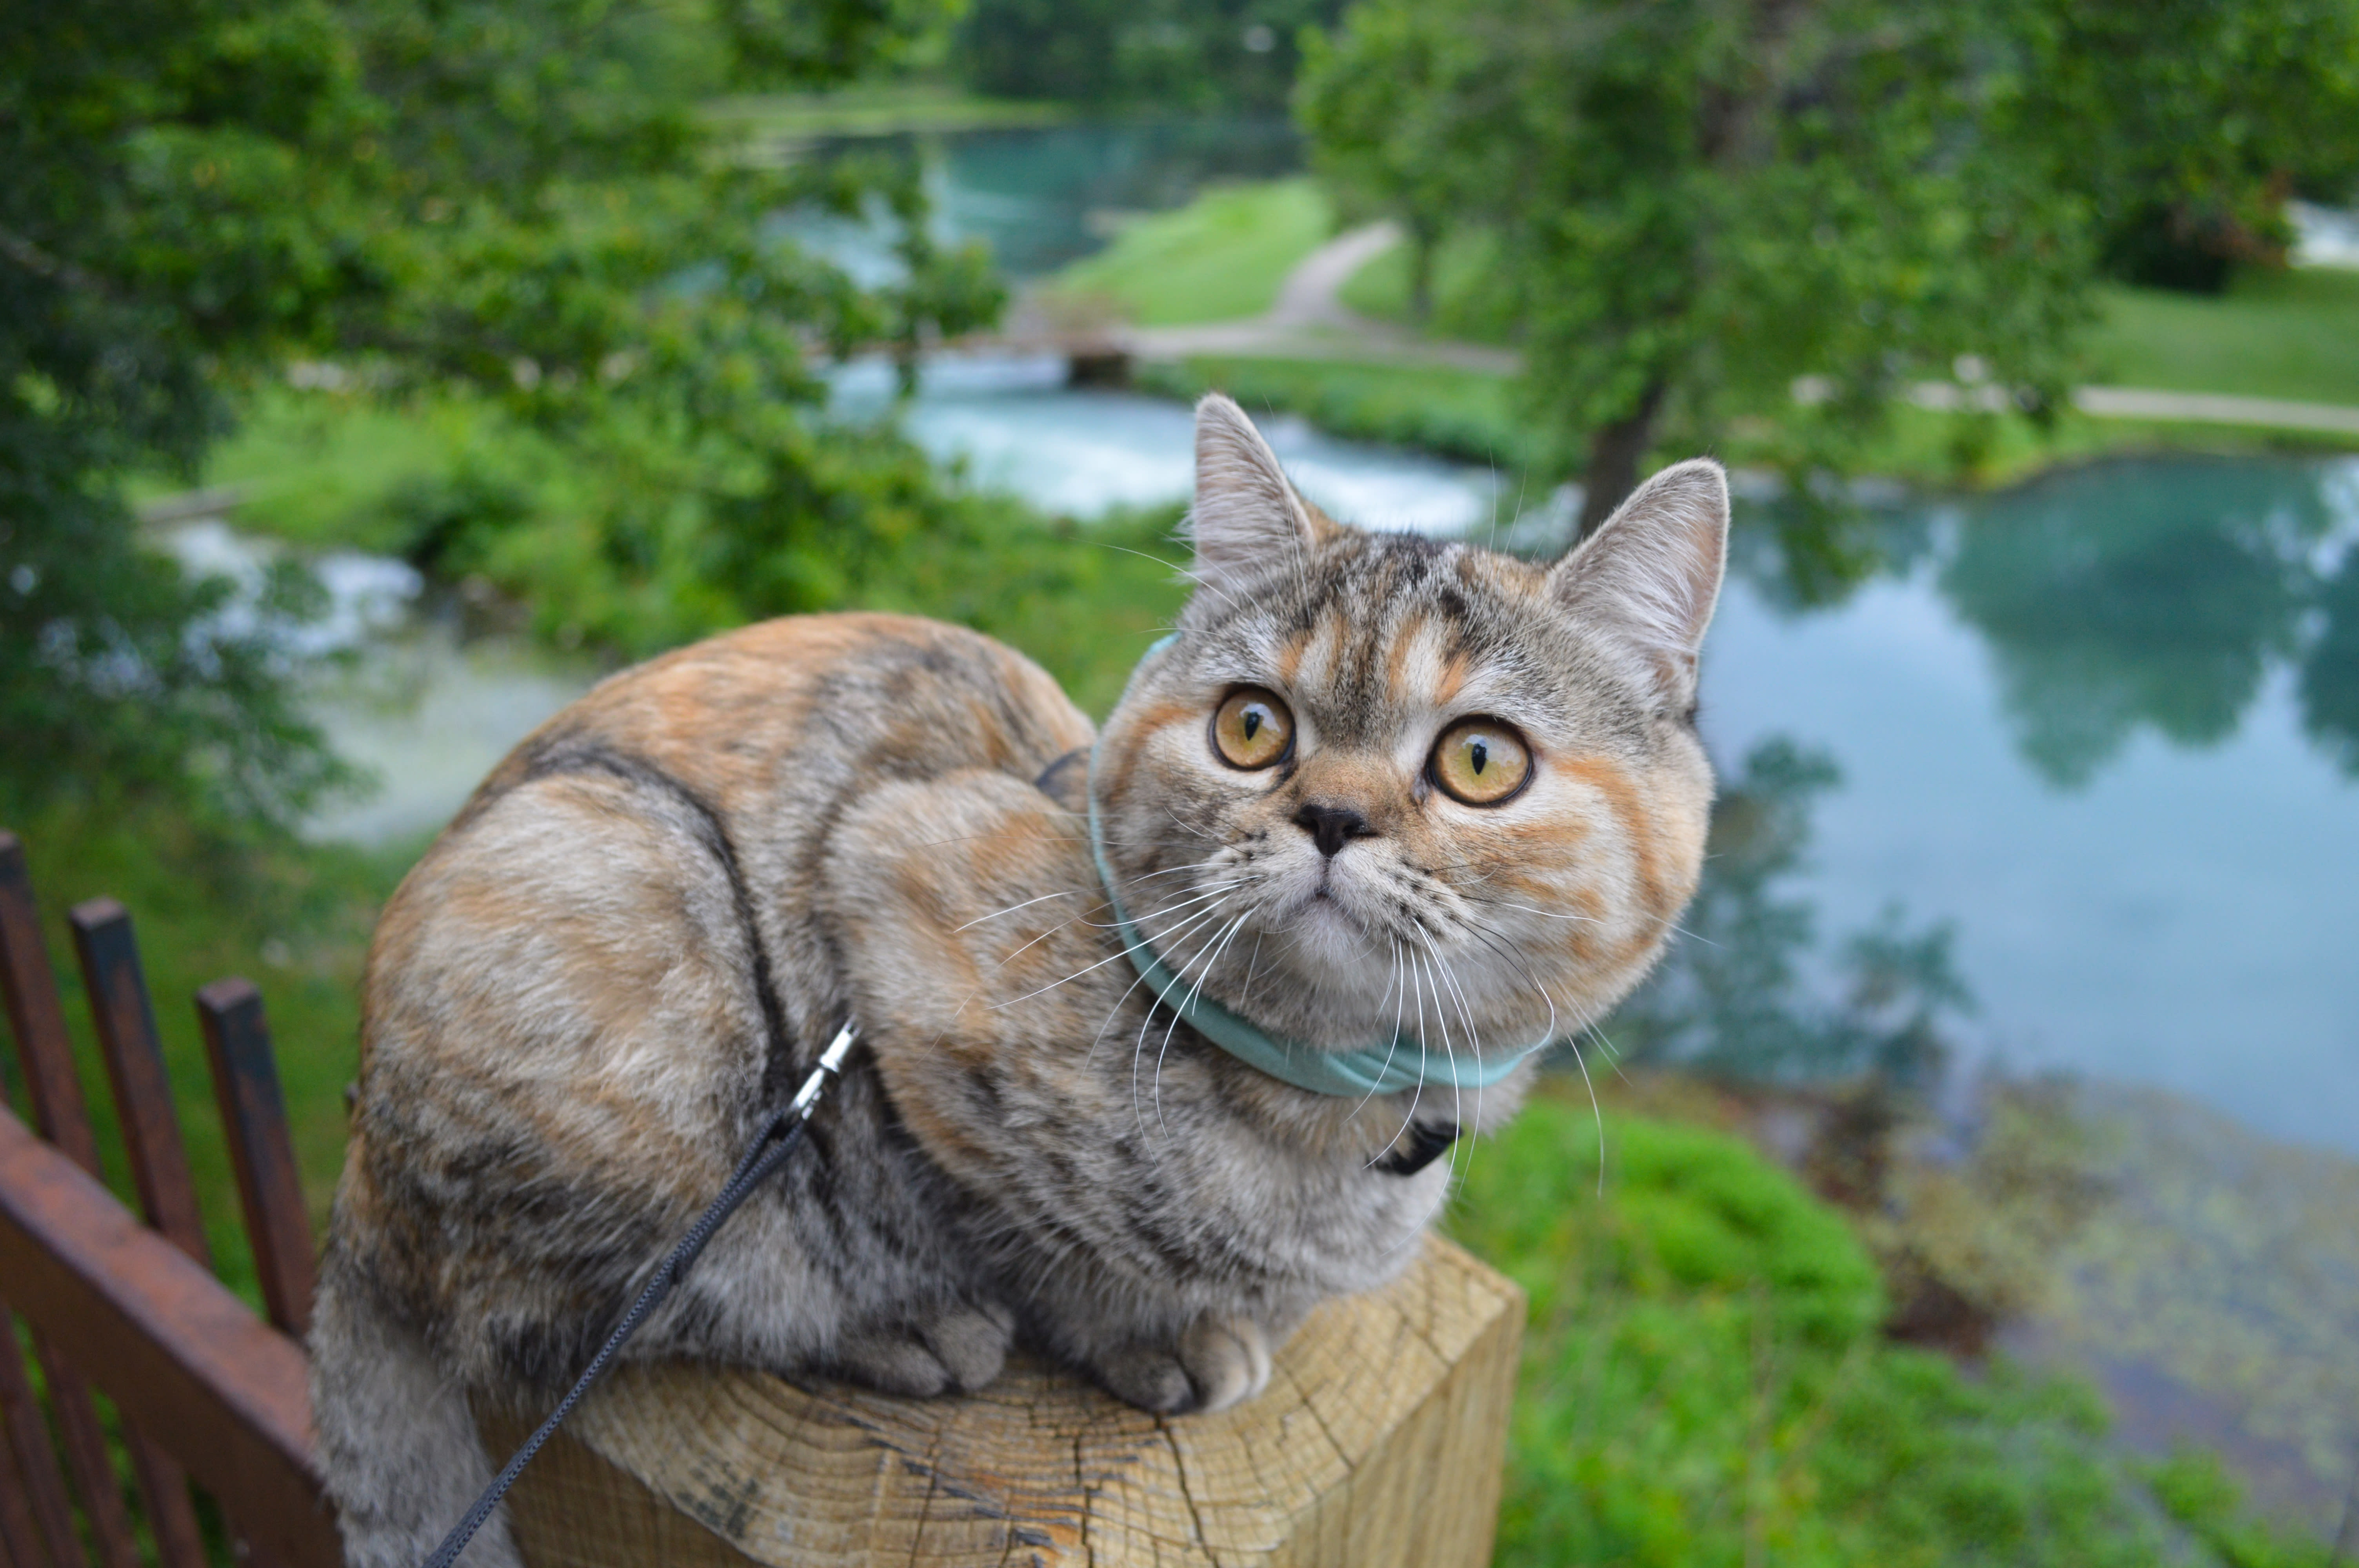 cat walking on leash outdoors